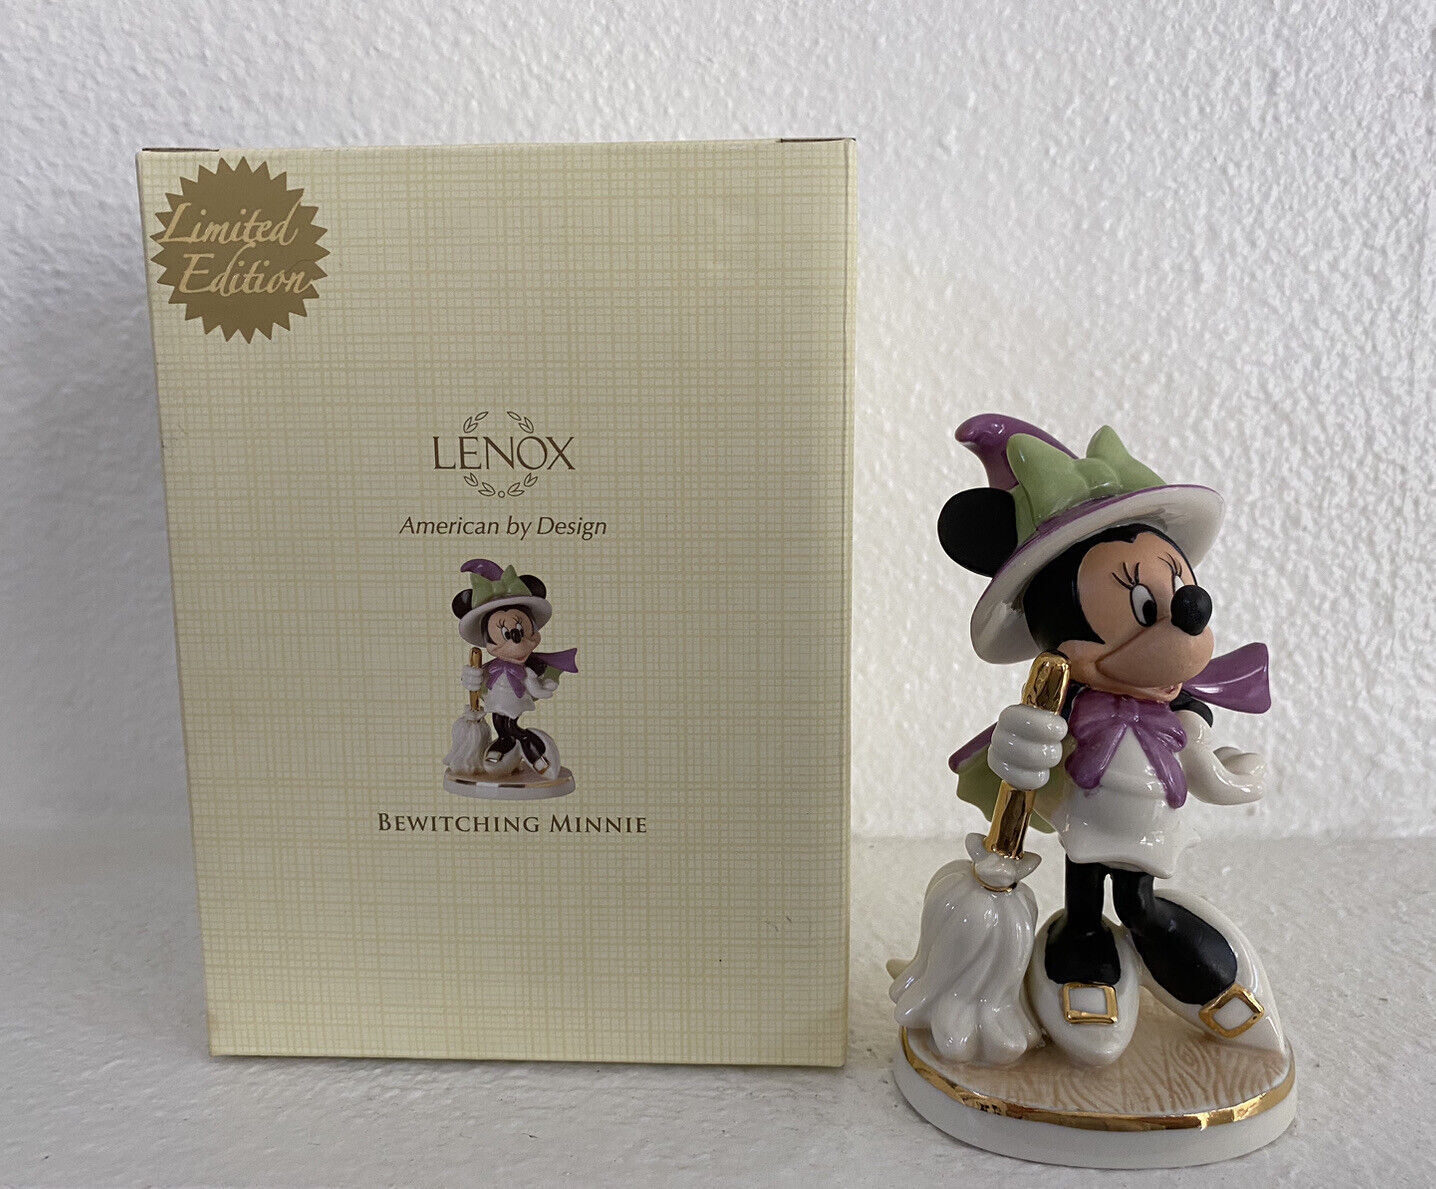 LENOX BEWITCHING MINNIE Disney Showcase LIMITED EDITION Figurine New in BOX wCOA